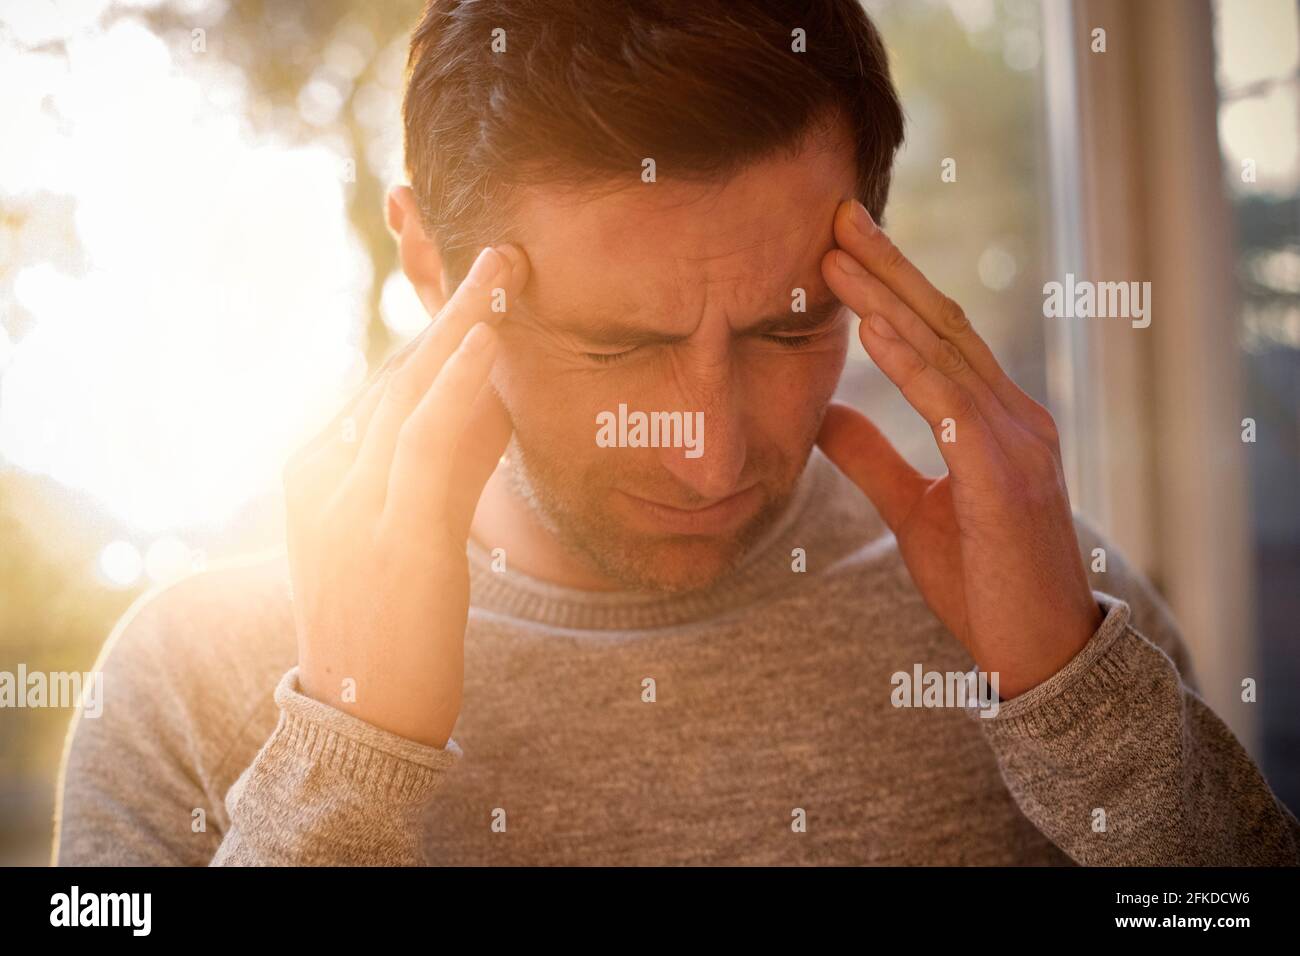 Man with headache Stock Photo